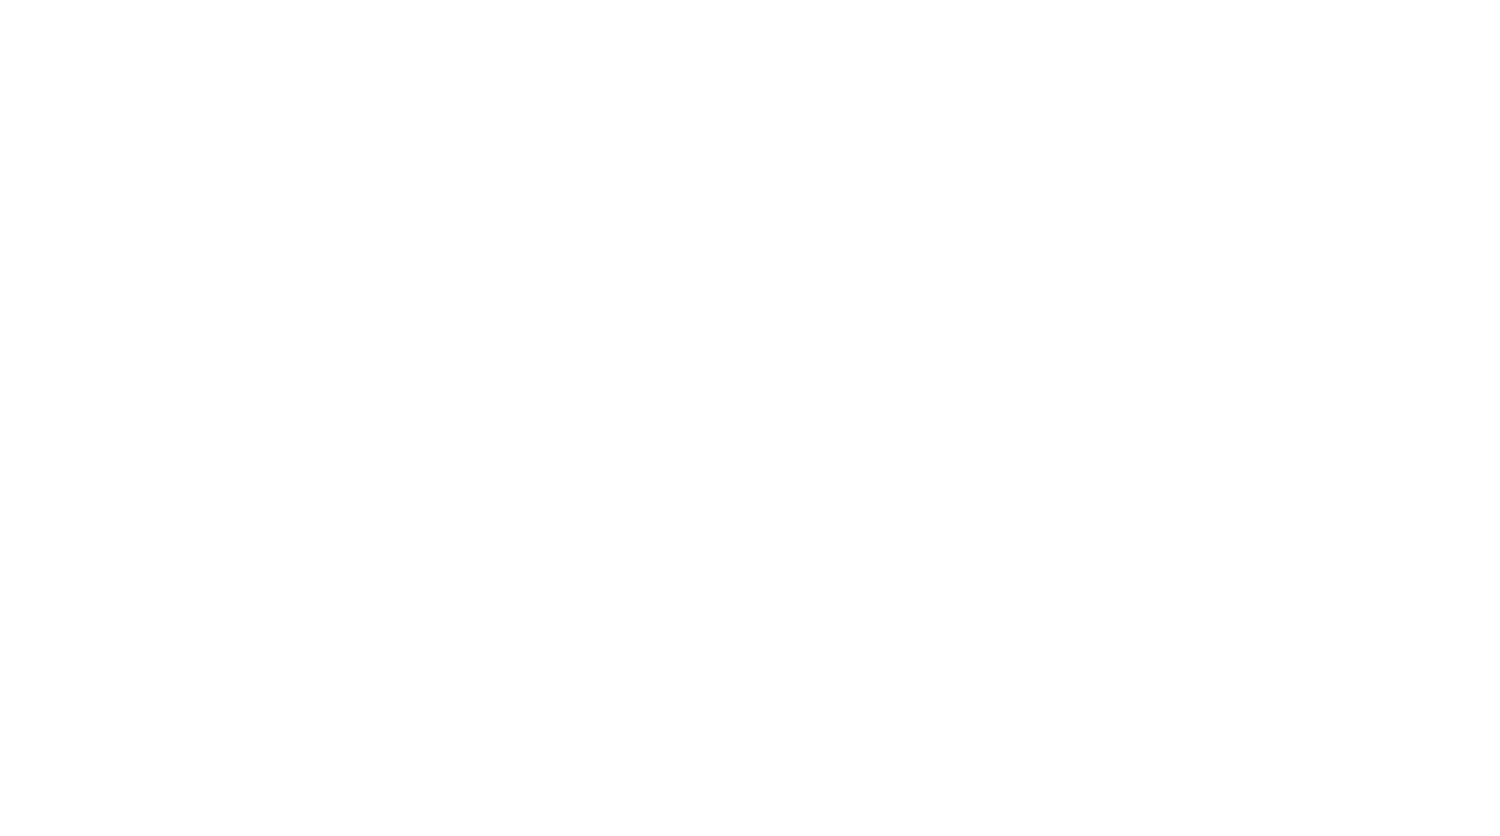 Anthem Growth Year